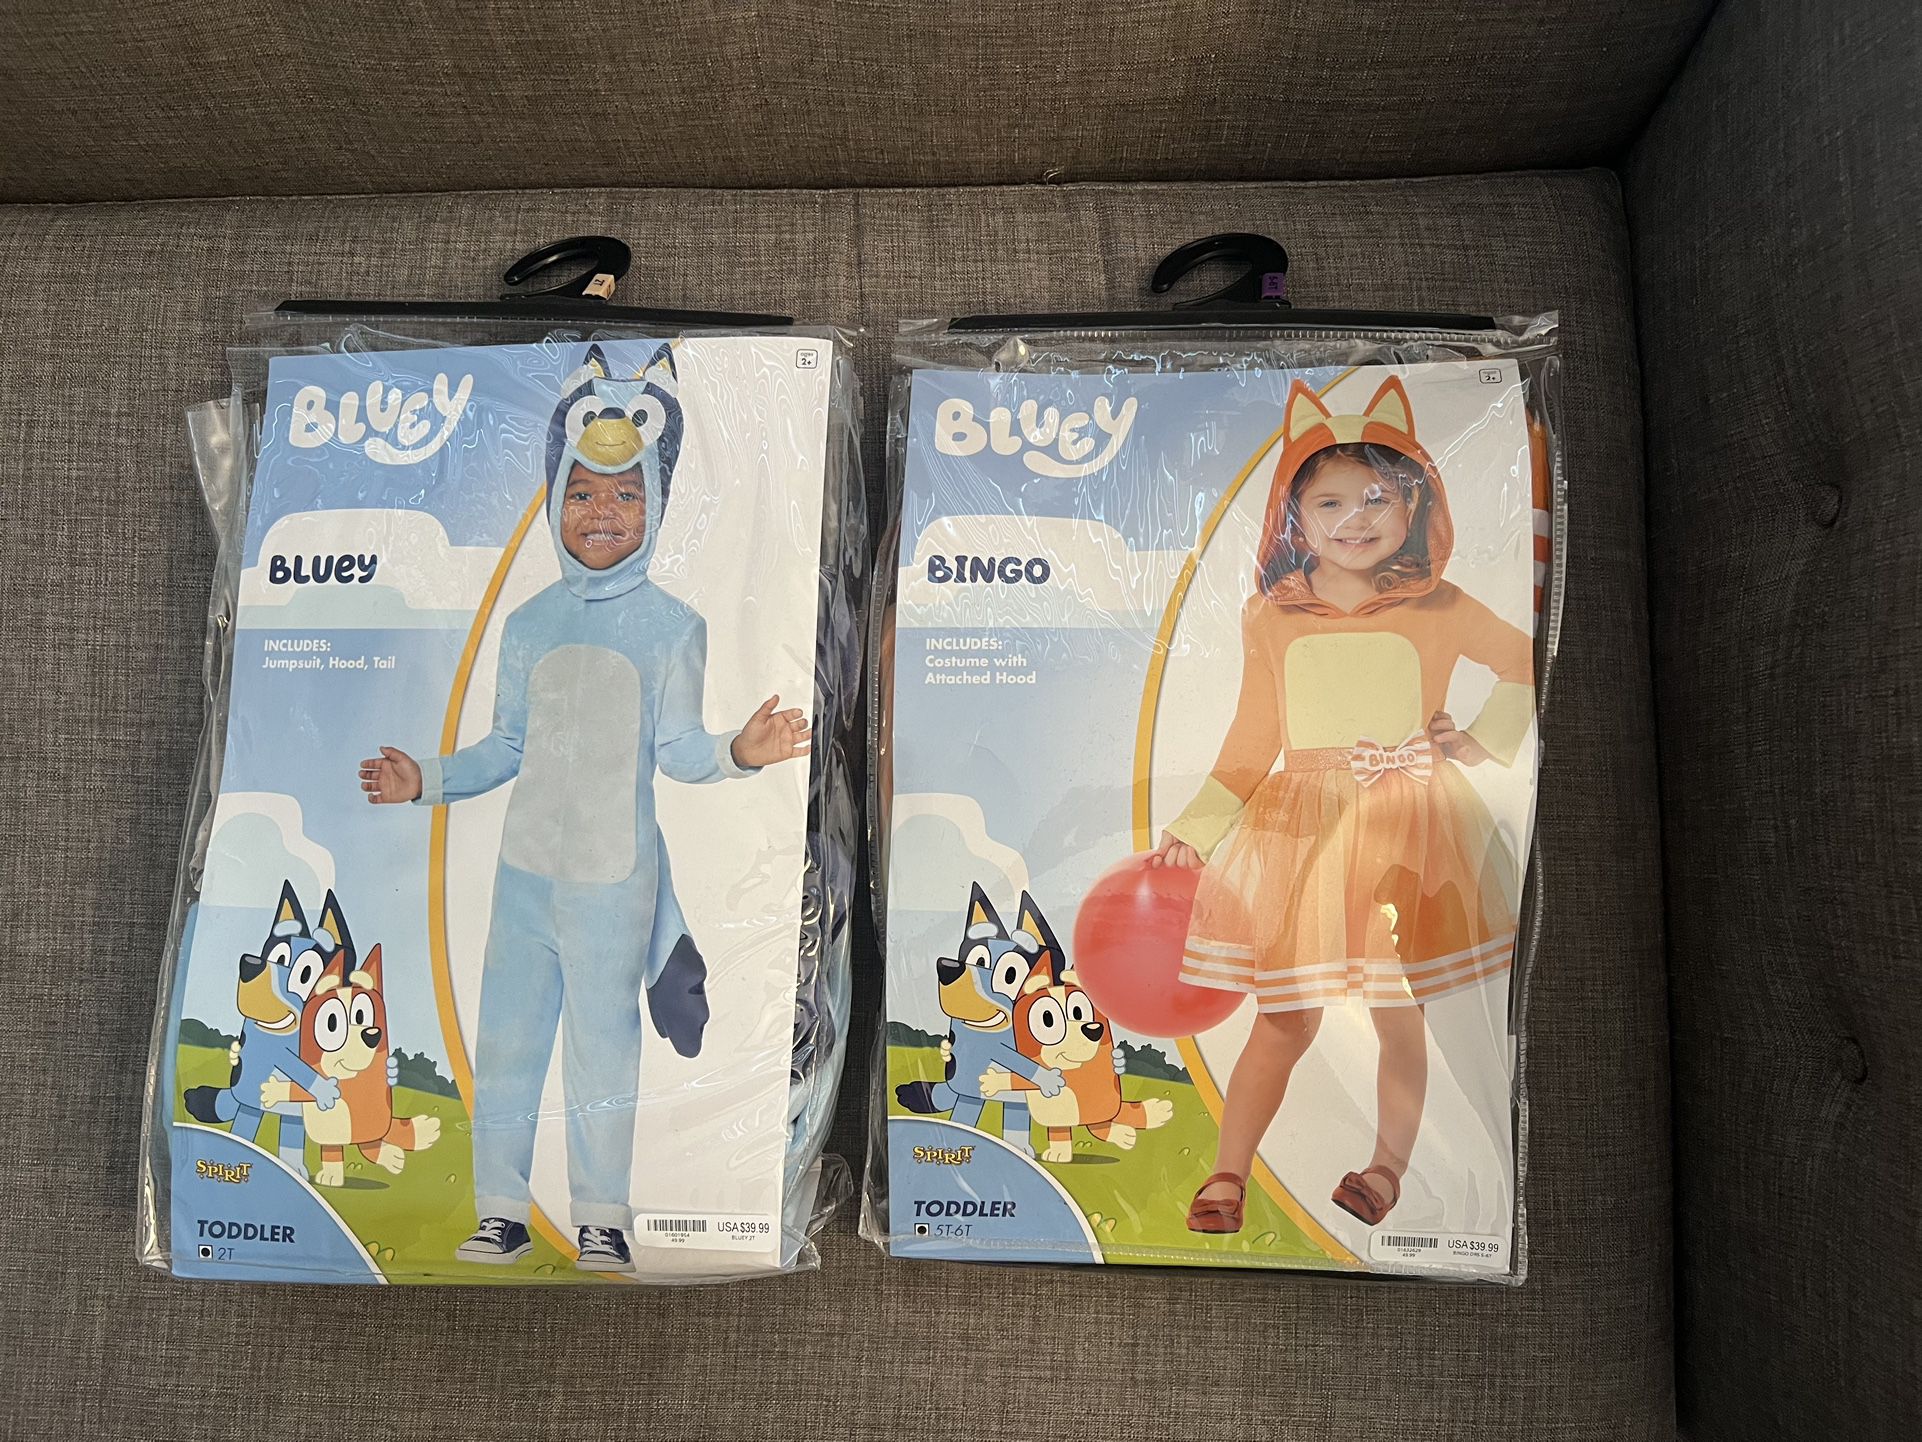 Bingo and a Bluey costumes